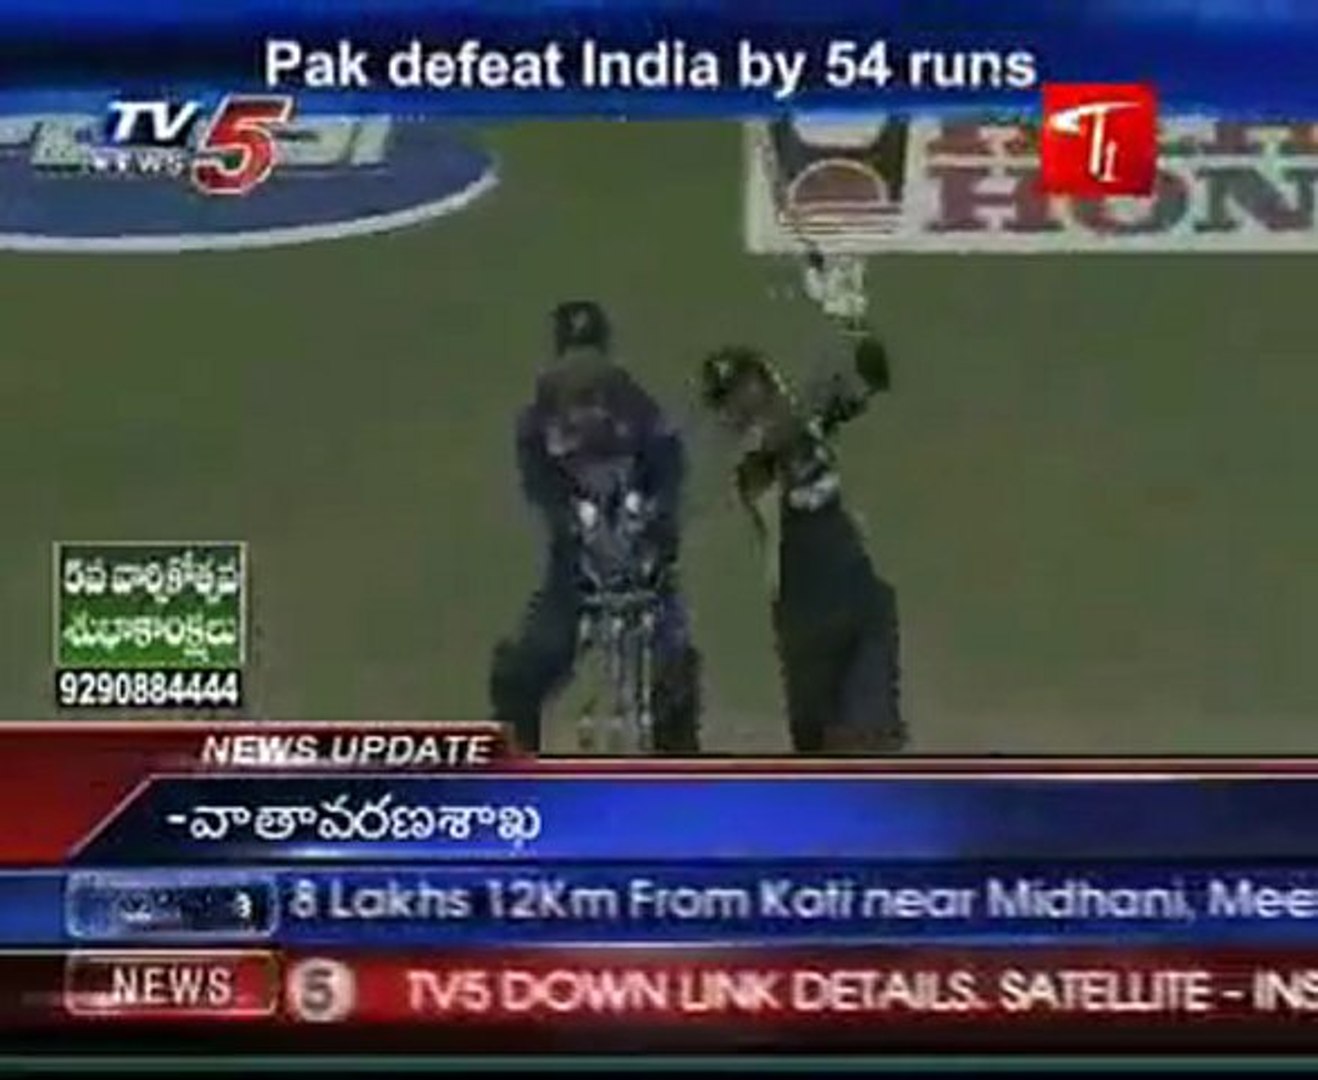 Pak defeat India by 54 runs